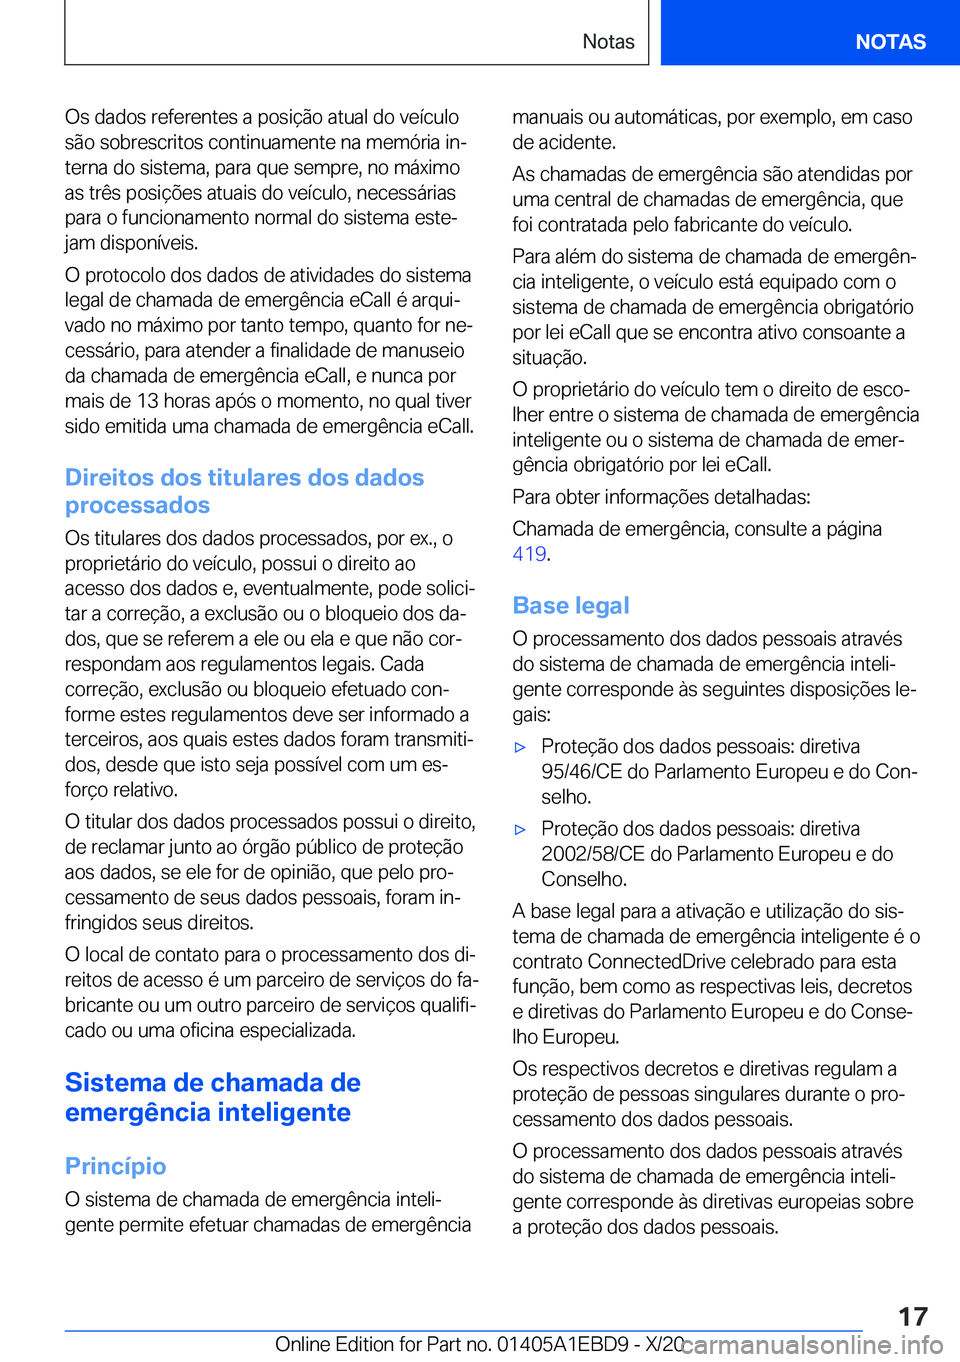 BMW 3 SERIES 2021  Manual do condutor (in Portuguese) �O�s��d�a�d�o�s��r�e�f�e�r�e�n�t�e�s��a��p�o�s�i�